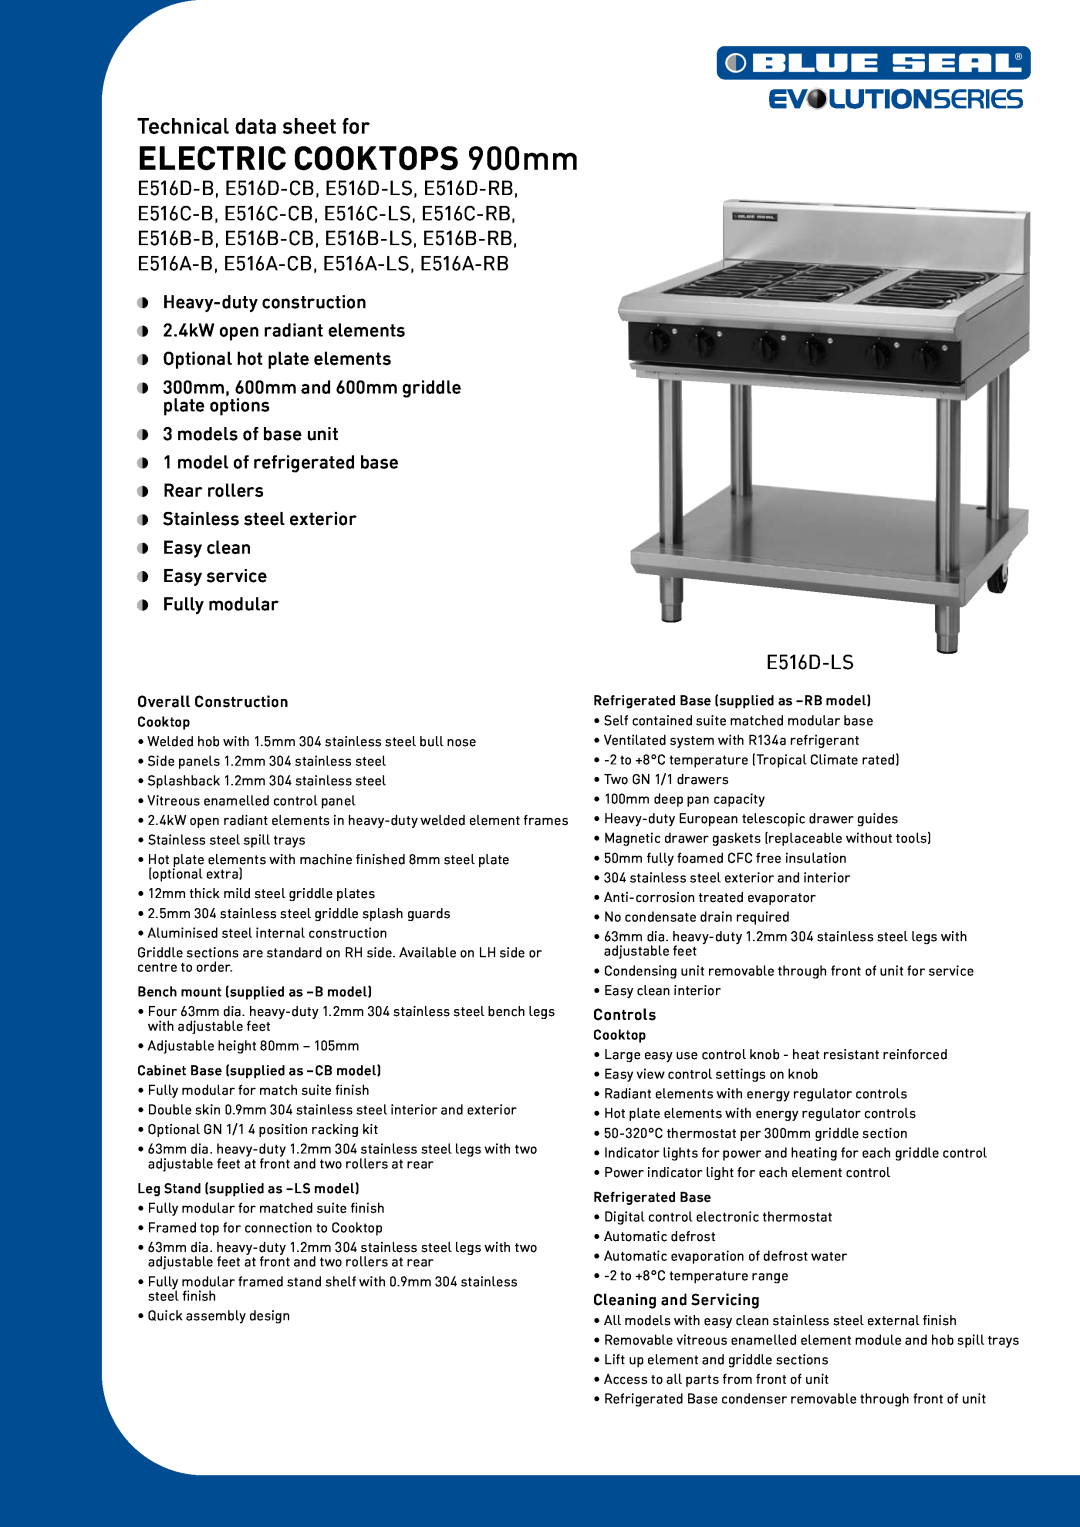 Moffat E516D-CB manual ELECTRIC COOKTOPS 900mm, Technical data sheet for, Overall Construction, Controls, E516D-LS 